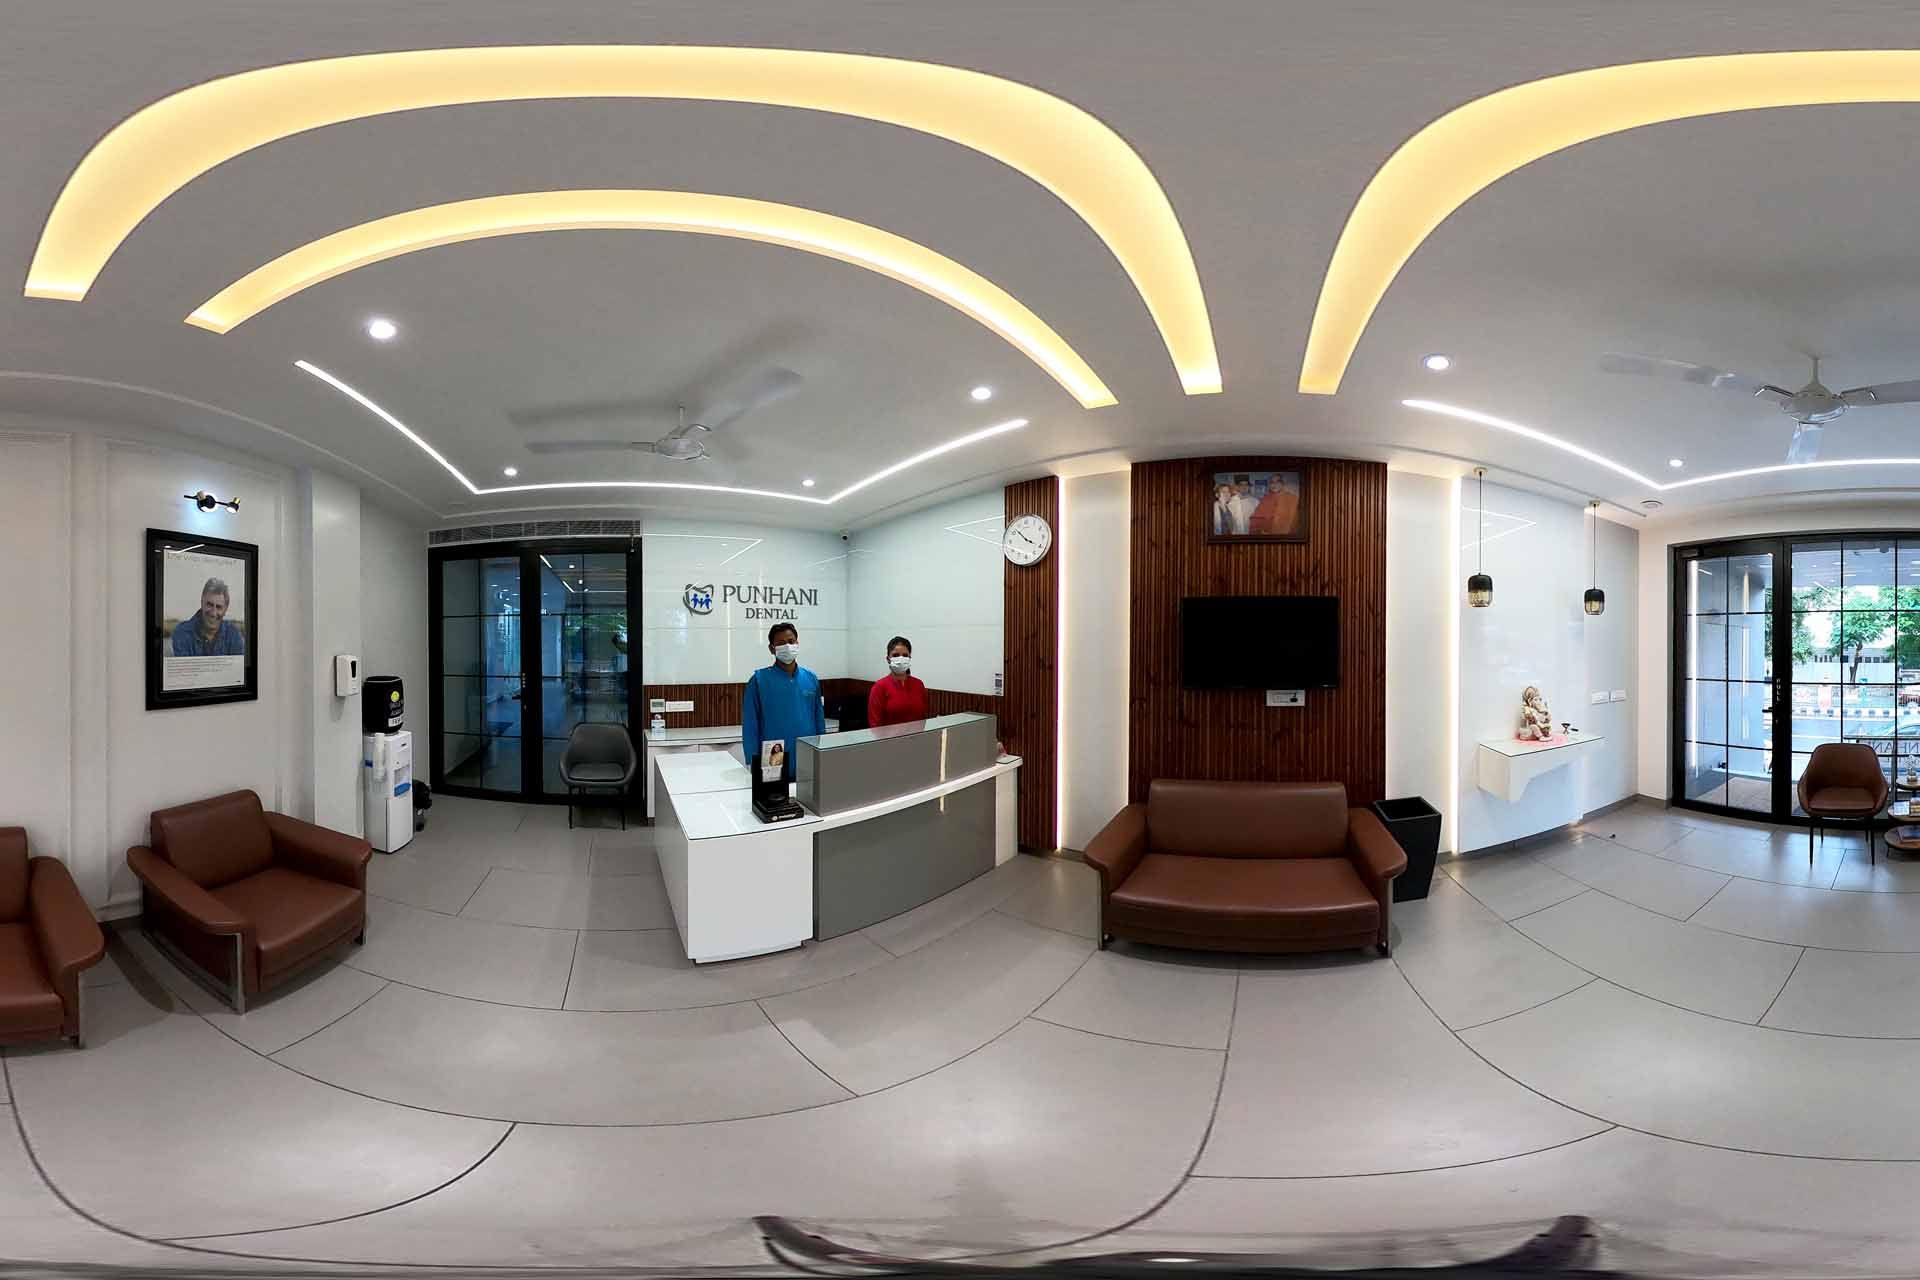 360° Virtual Tour of Punhani Dental Clinic